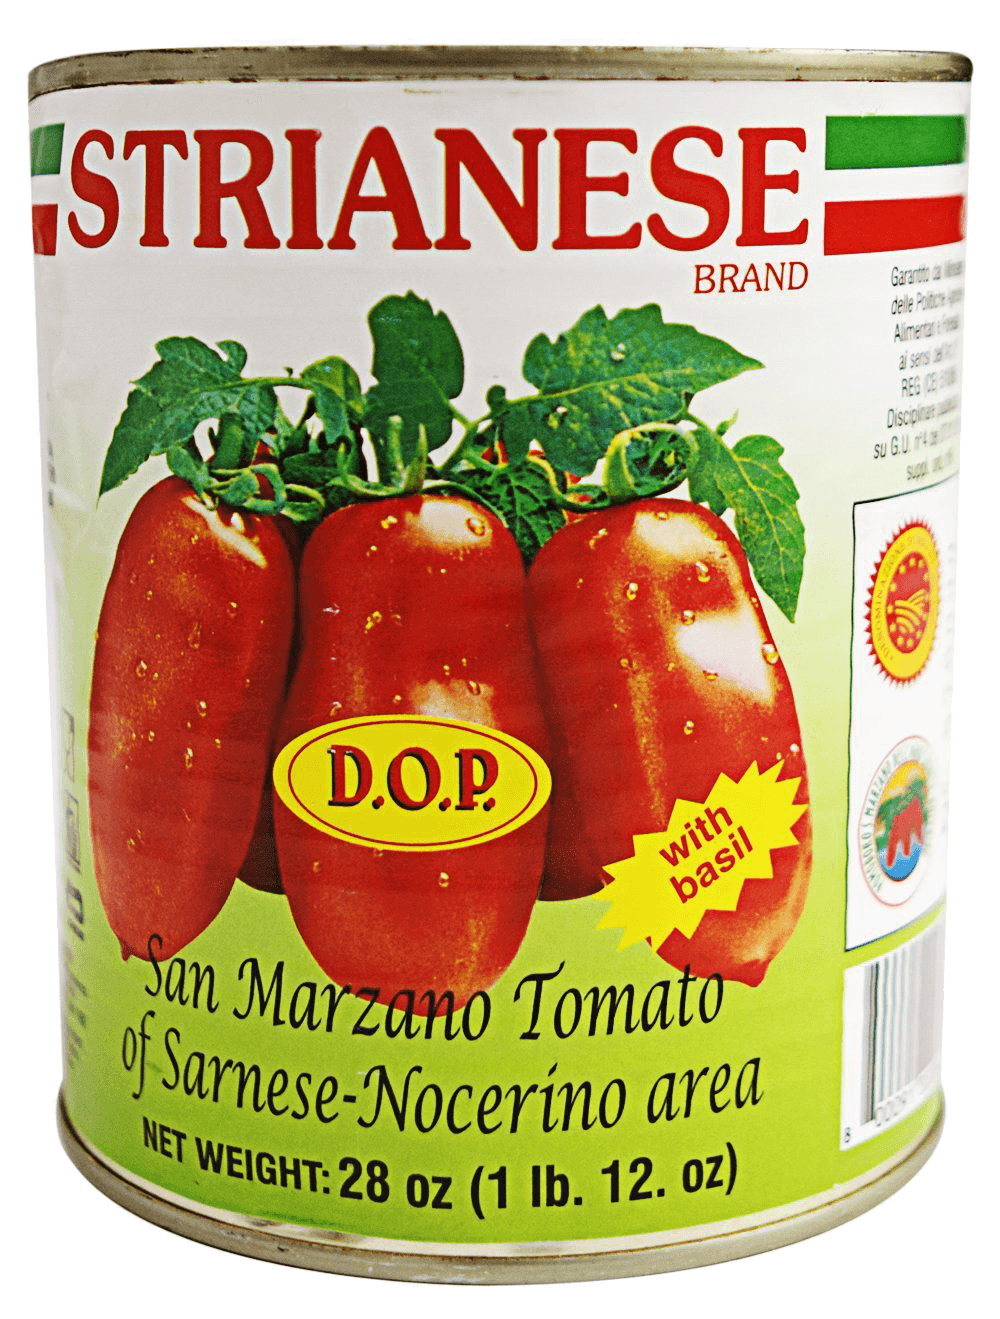 Italian Tomatoes - Strianese Italian DOP Whole San Marzano Tomatoes 28 Oz.Pack Of 3 - FREE SHIPPING